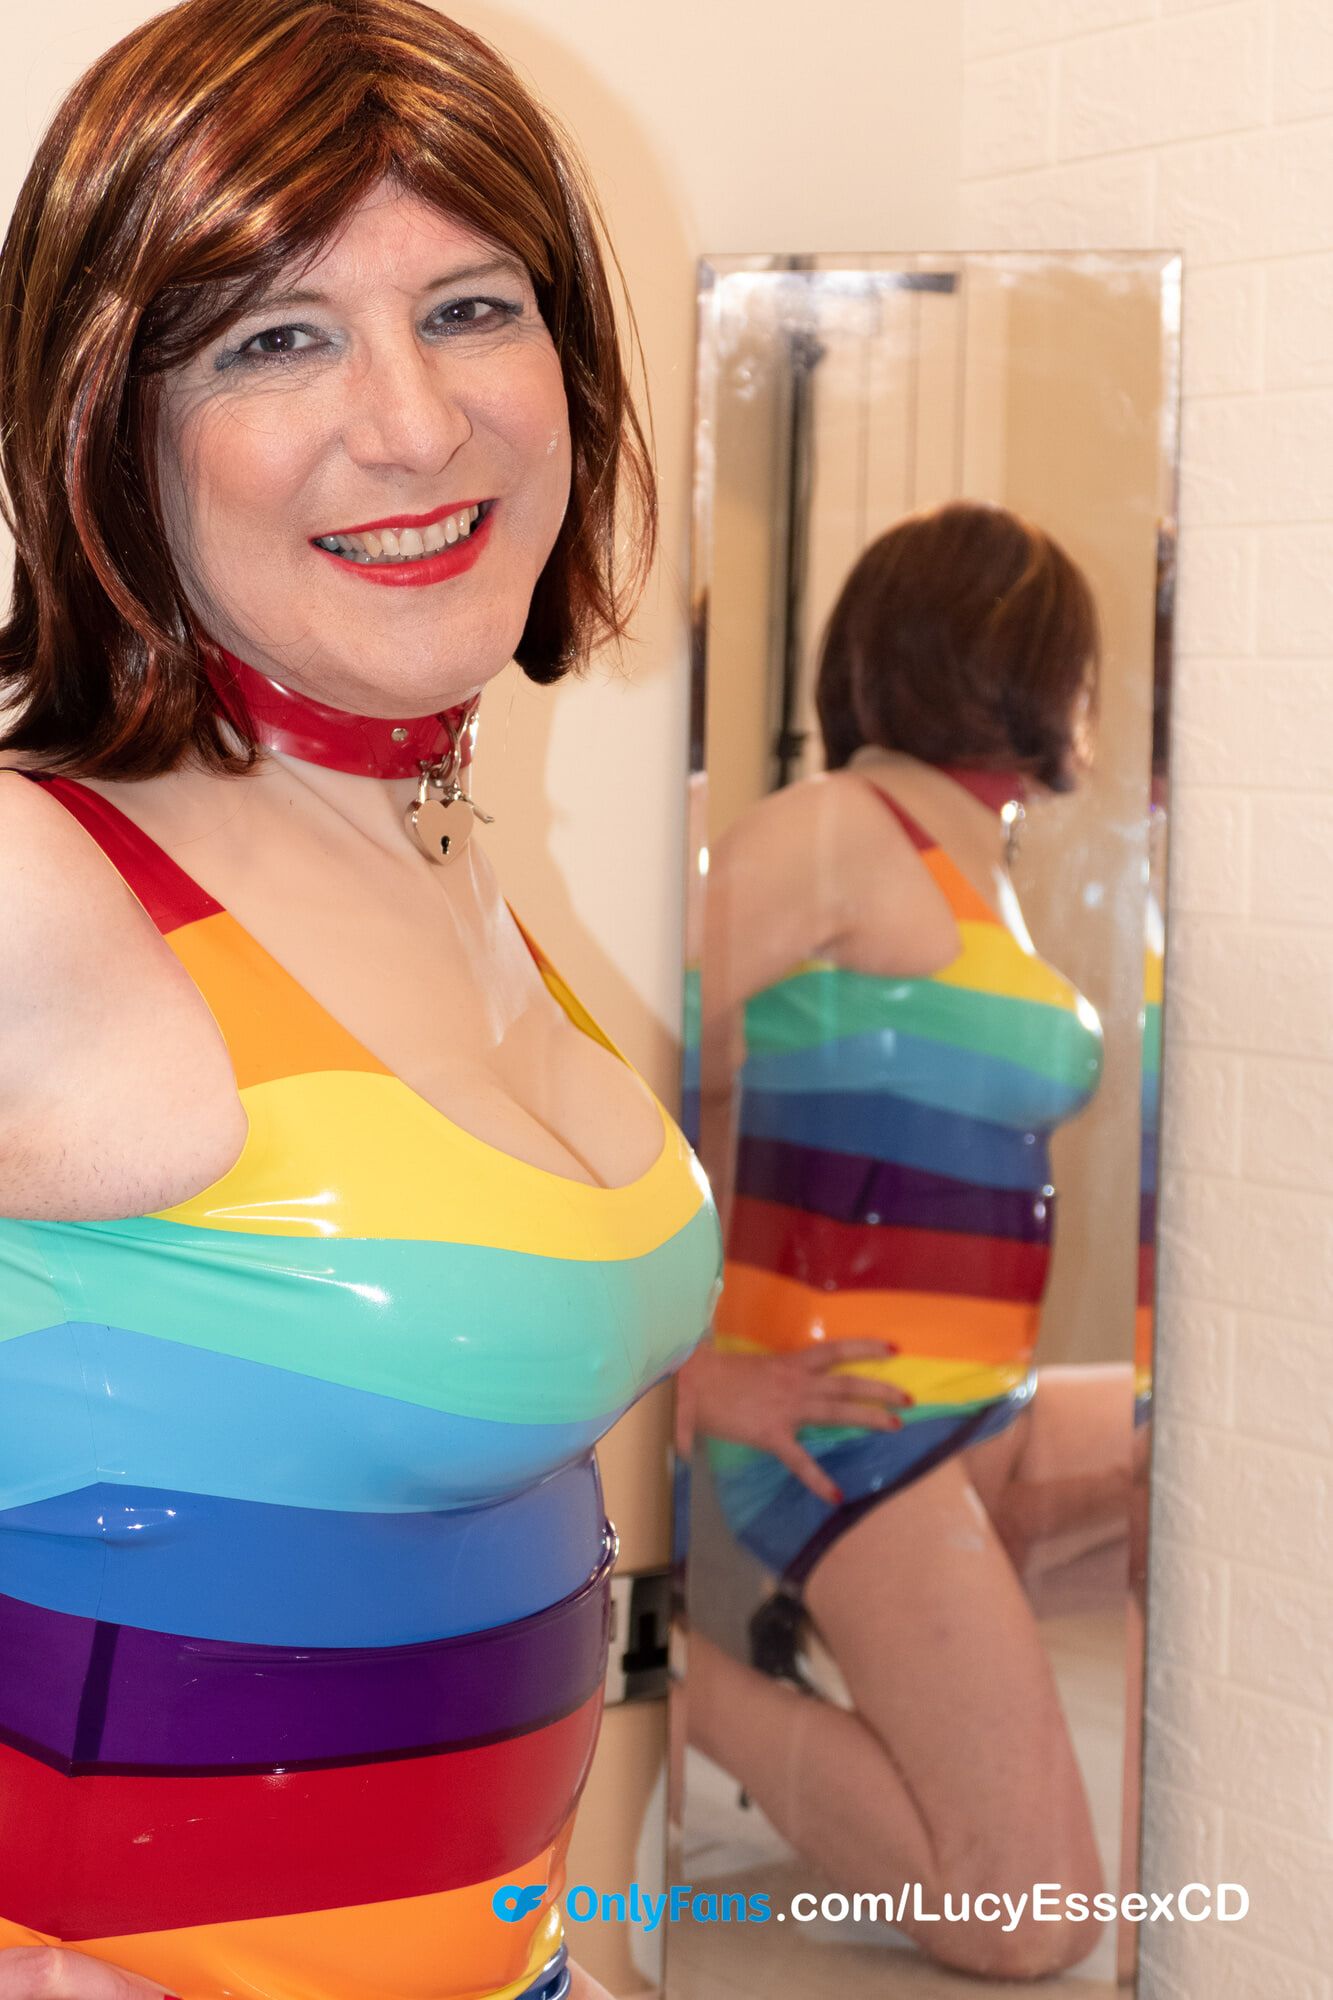 Big cock TGirl Lucy Essex CD new rainbow latex minidress #15